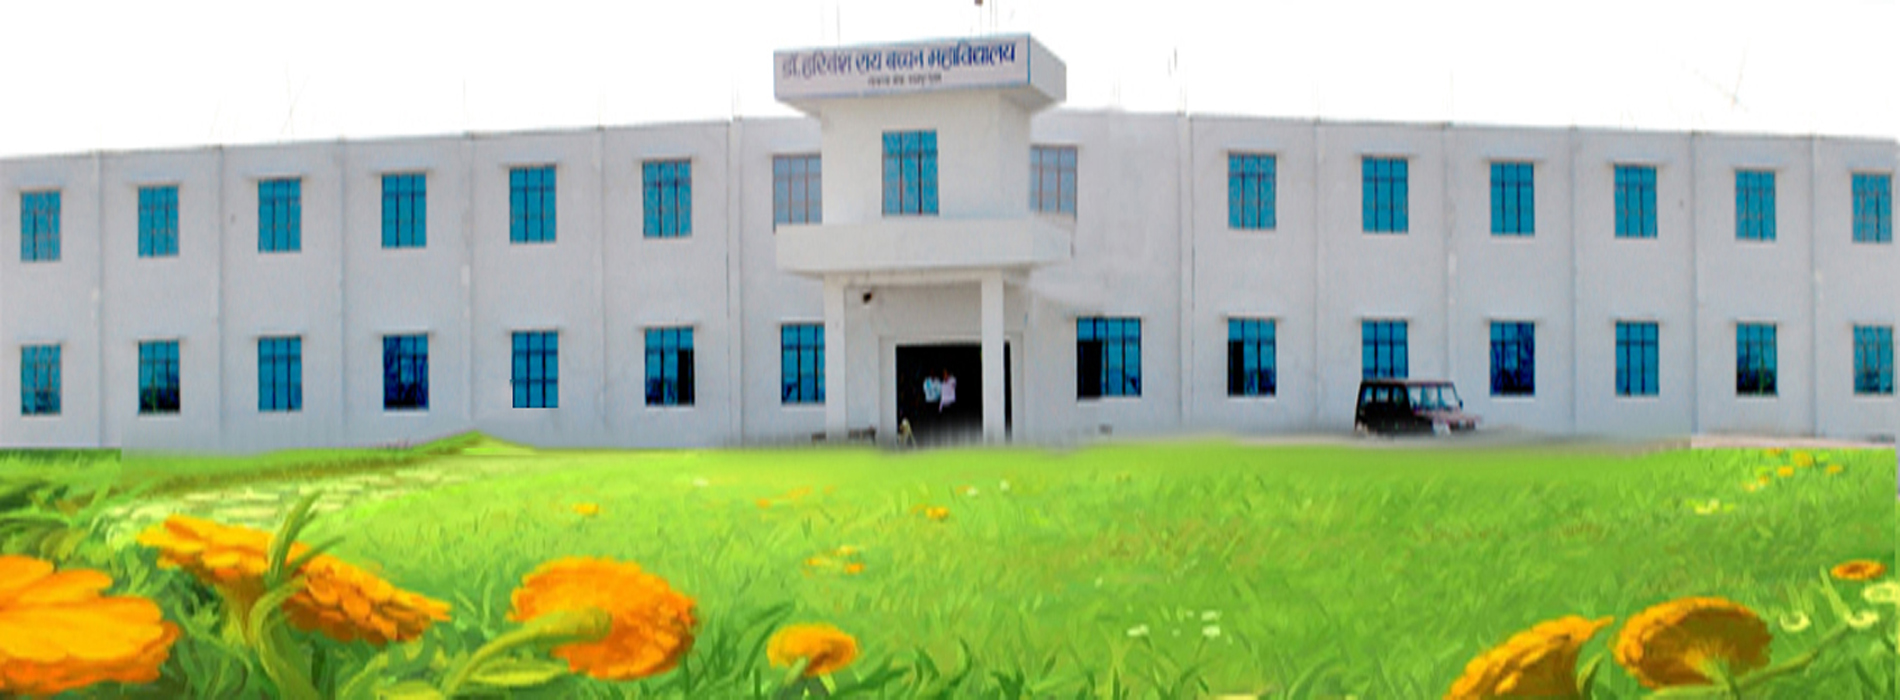 dr harivansh rai bachchan college